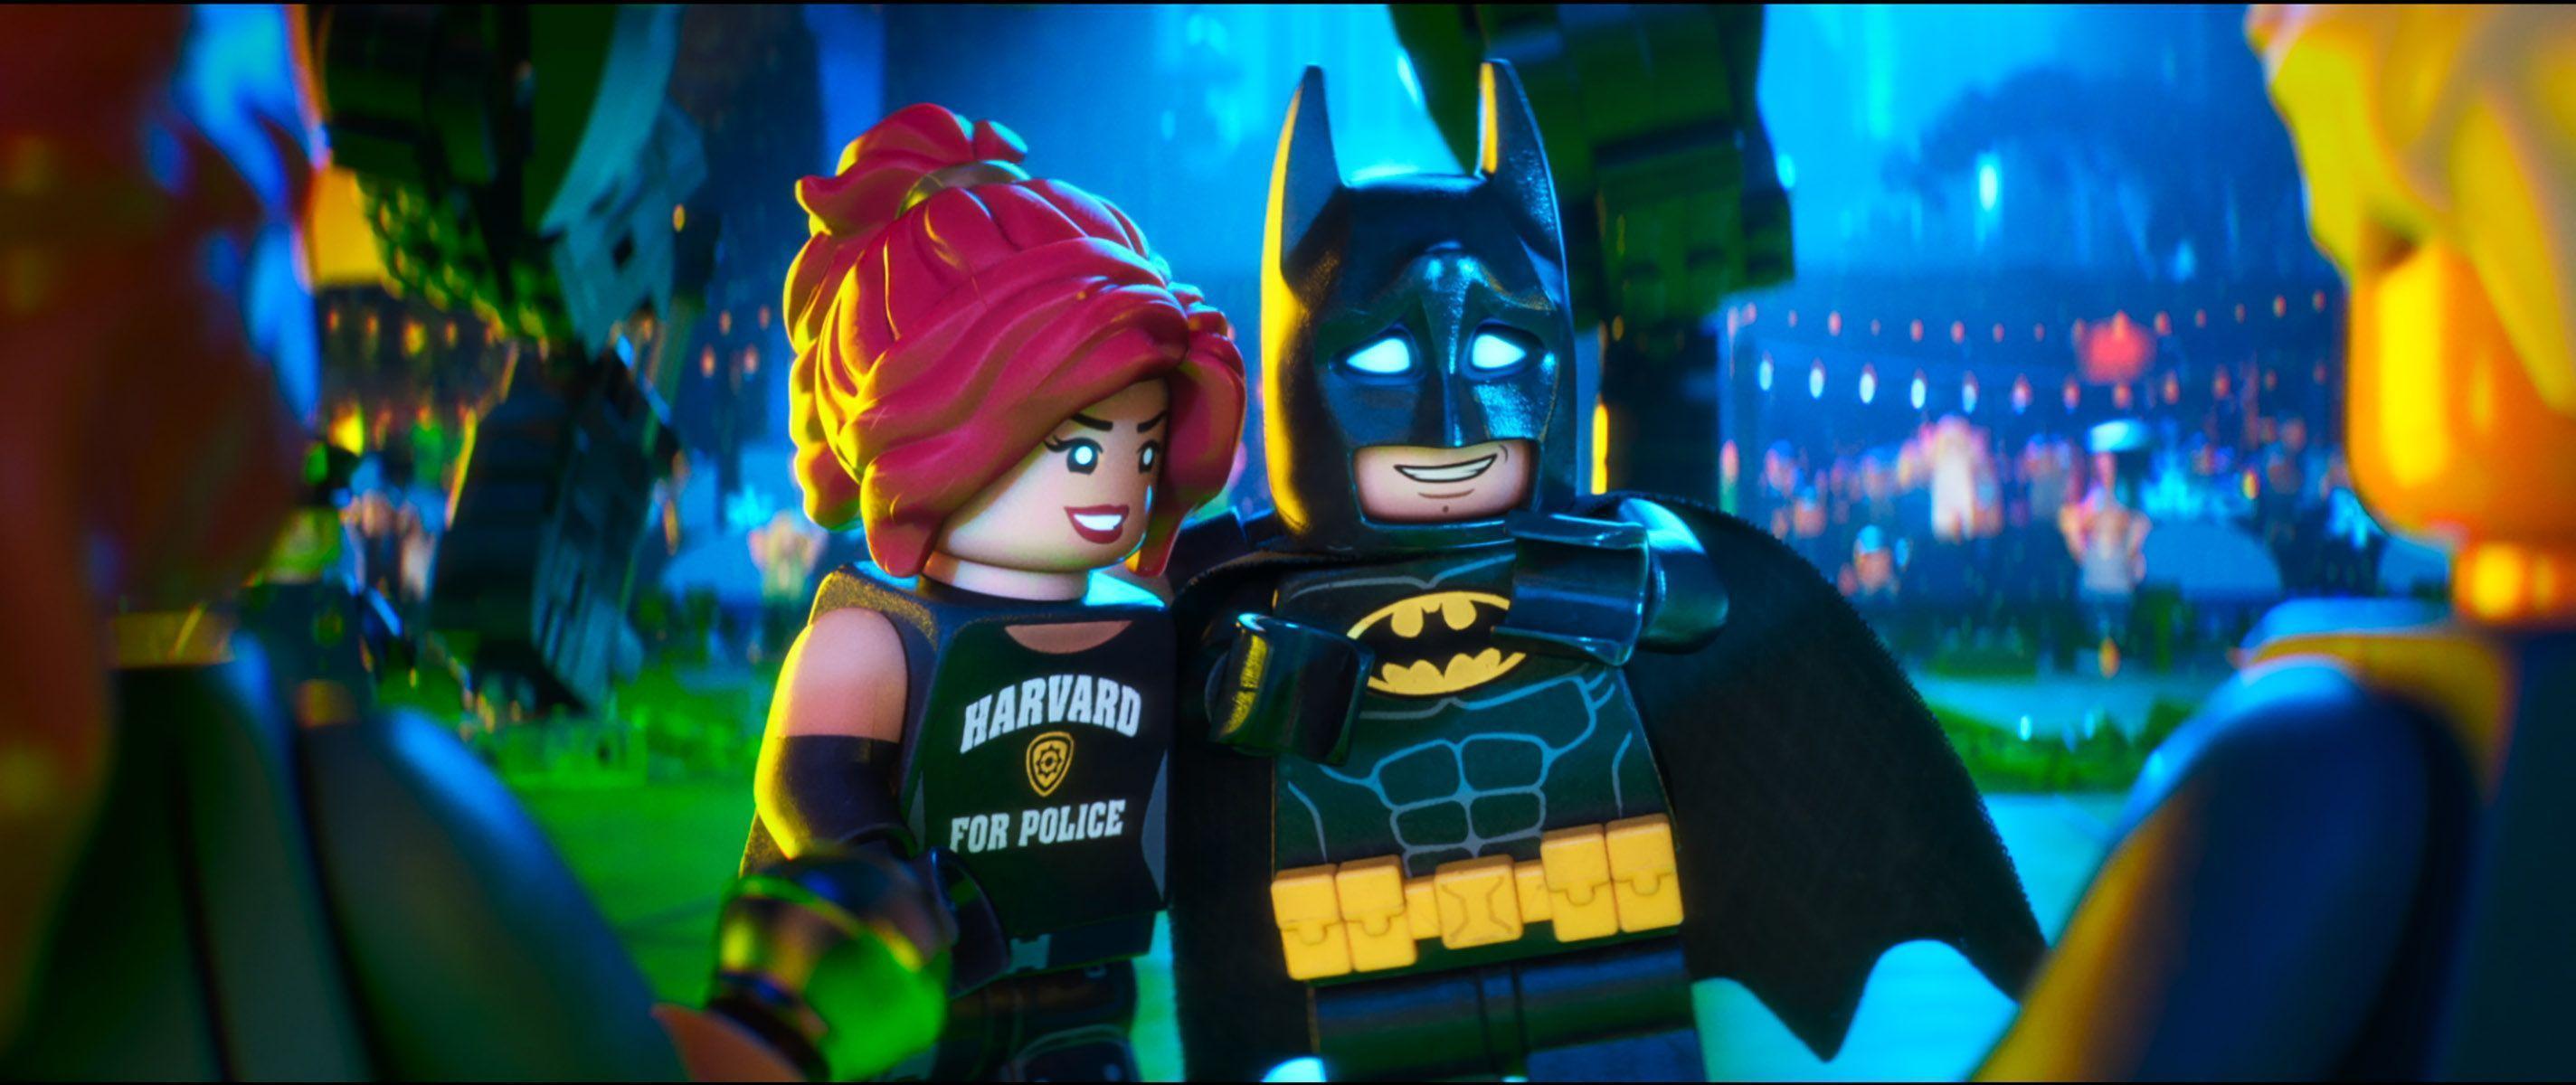 The LEGO Batman Movie Image: 29 Hi Res Photo